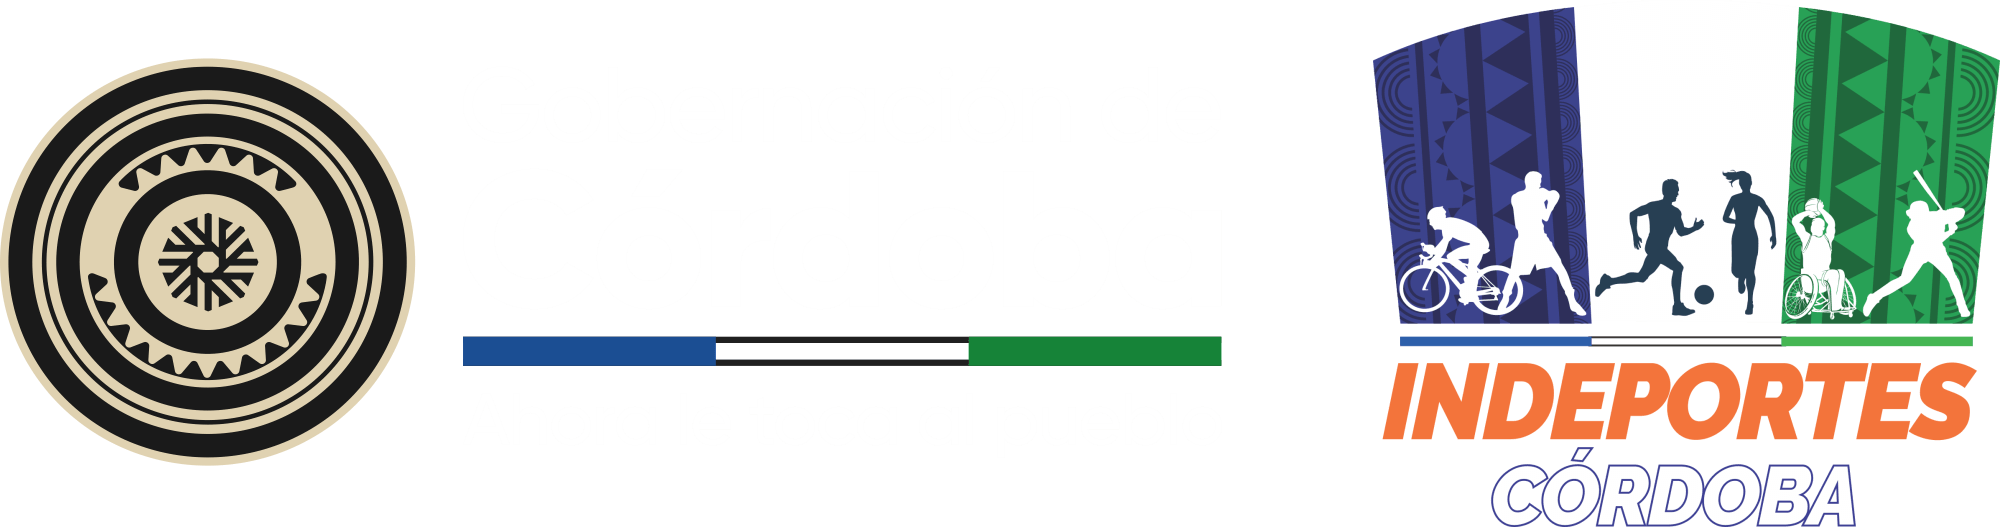 Indeportes Córdoba